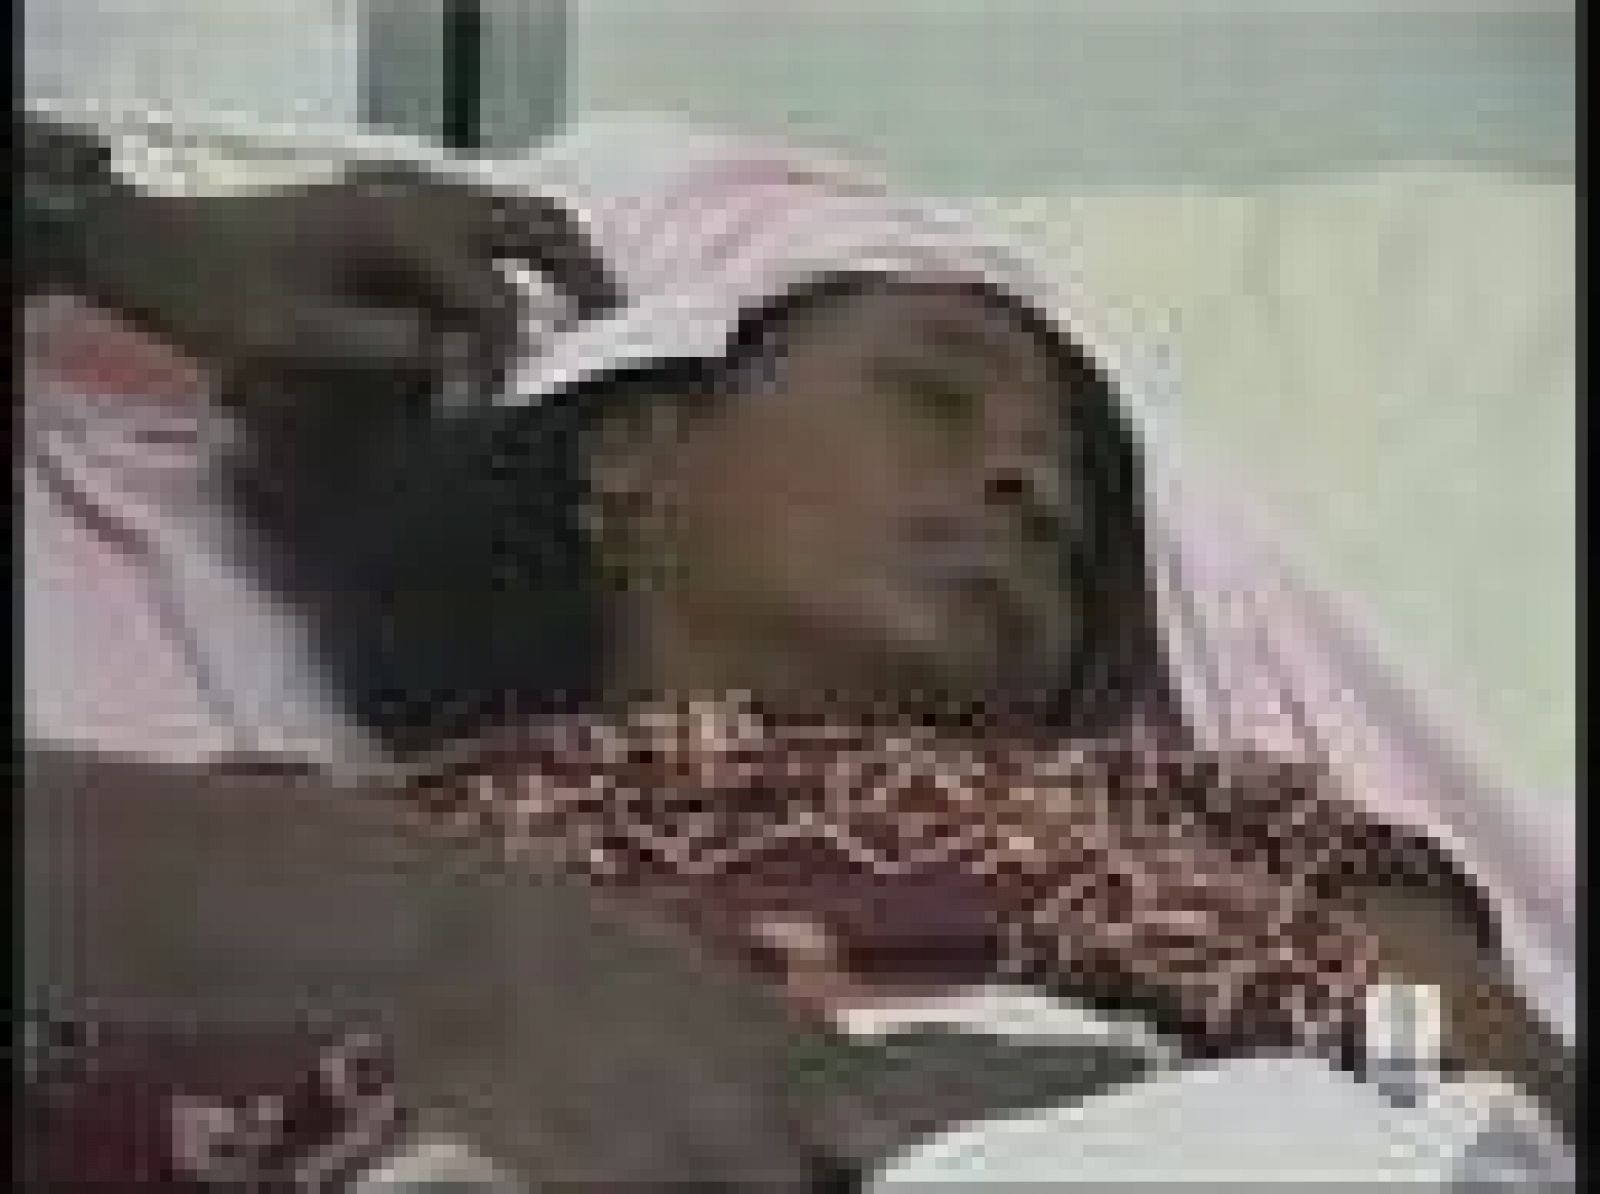  Una bomba mata a 16 mujeres en Somalia